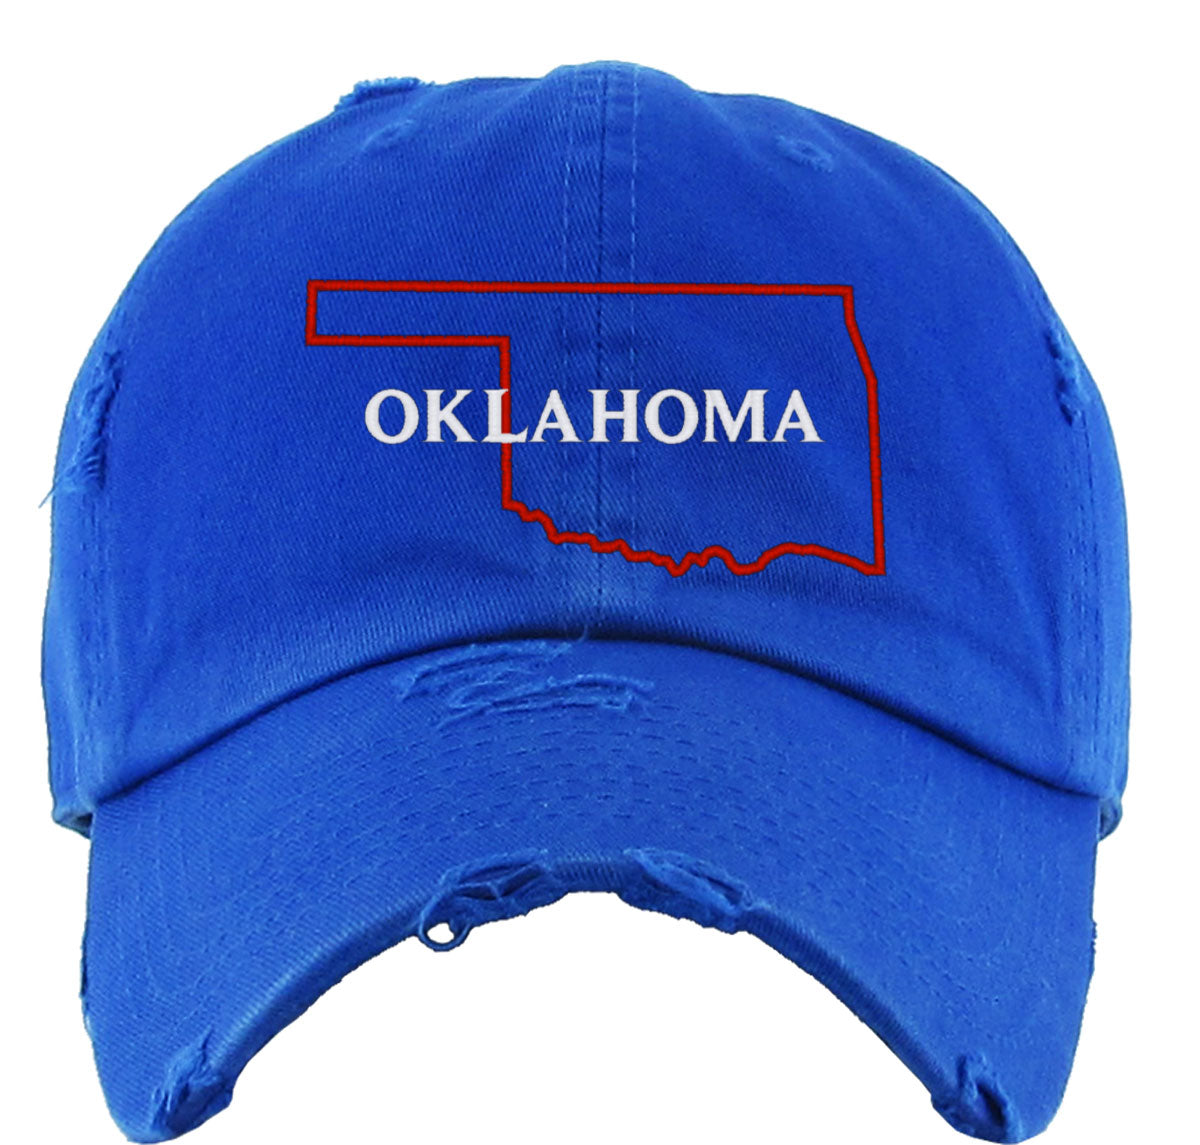 Oklahoma Vintage Baseball Cap